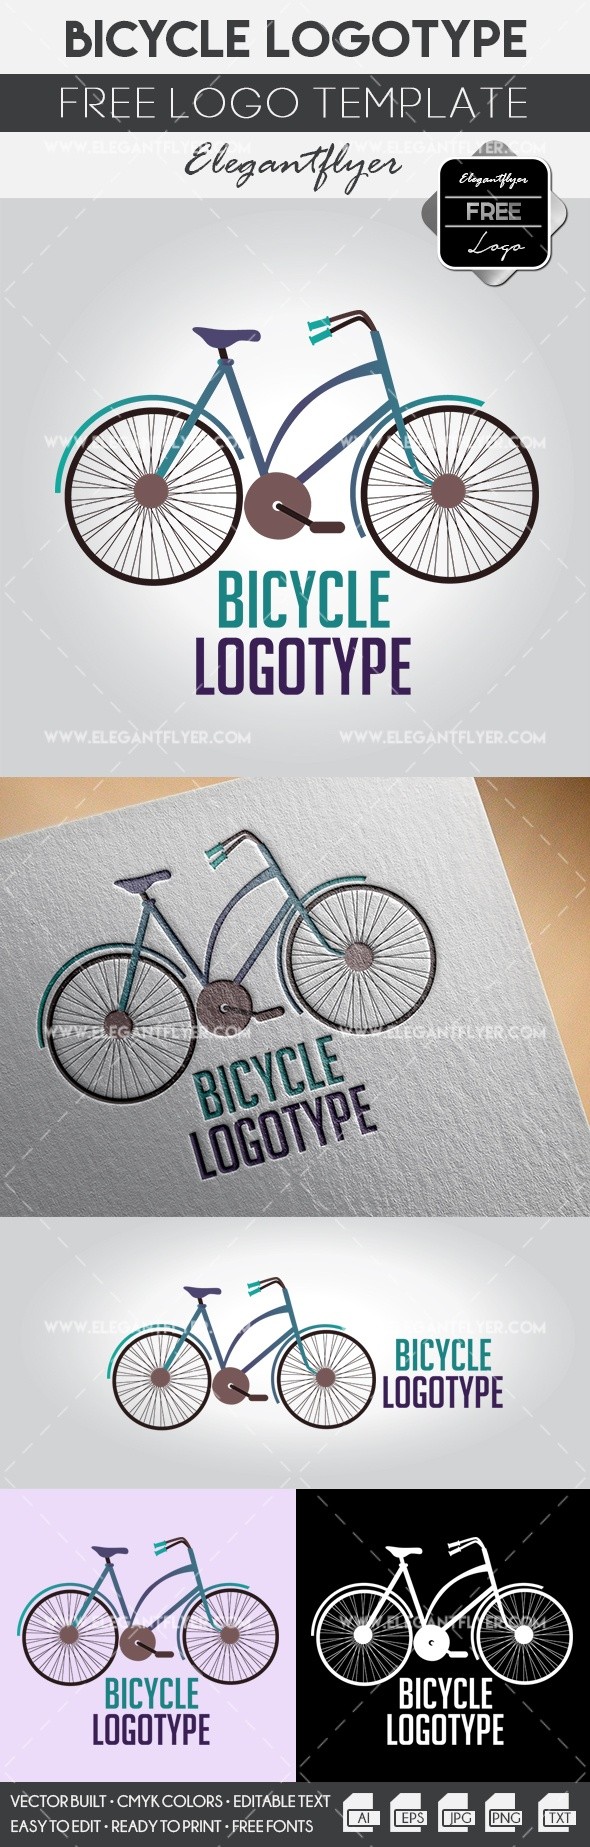 Bicicletta by ElegantFlyer